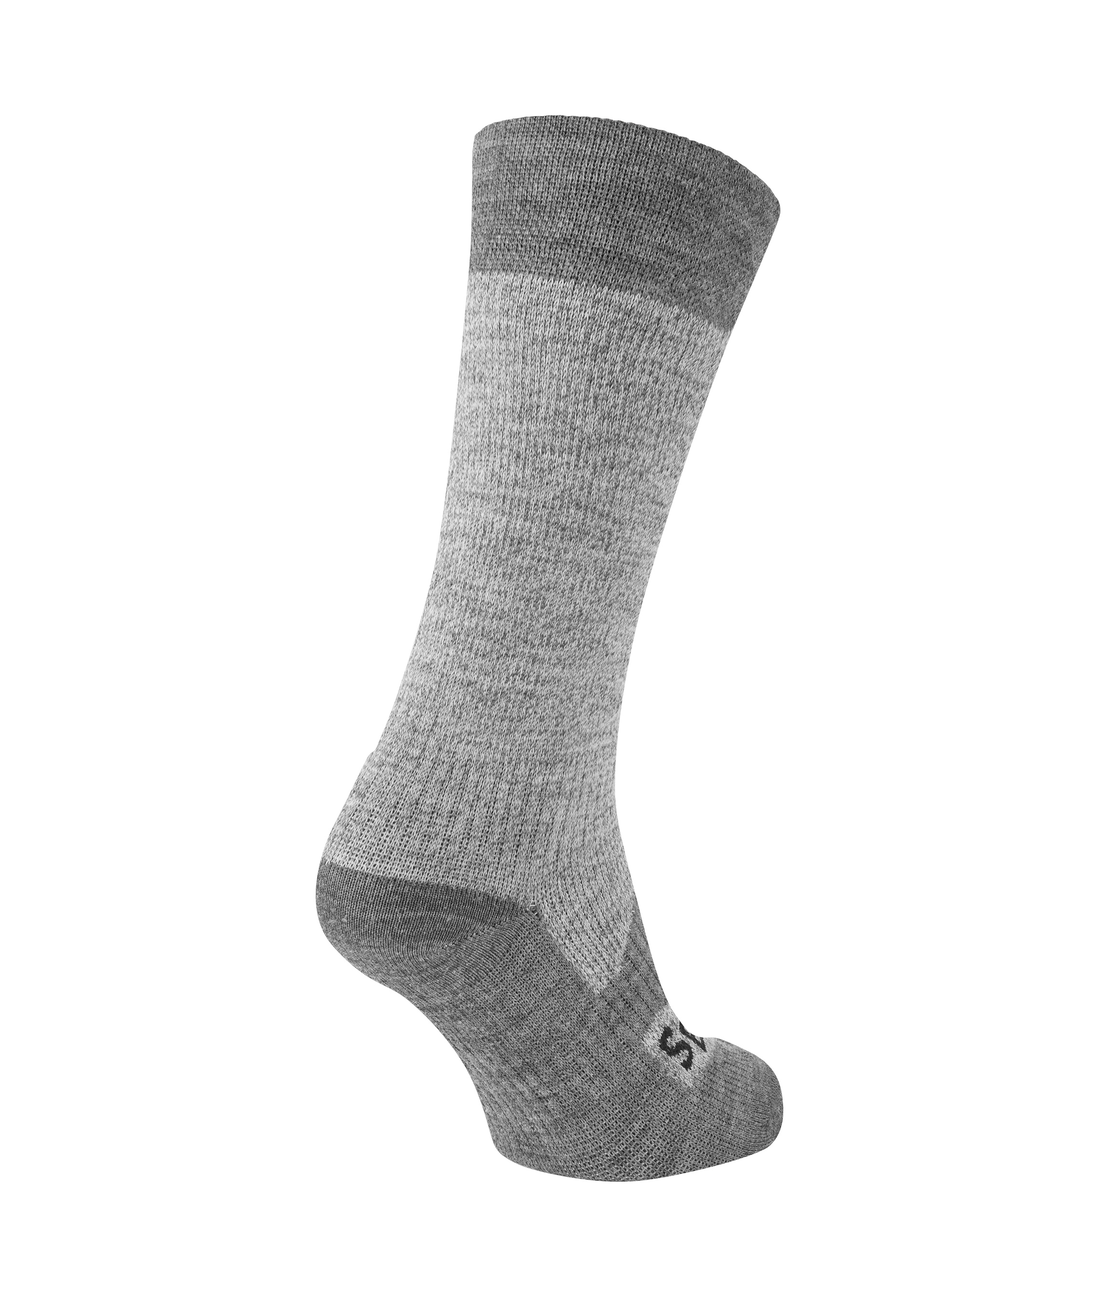 Raynham - Waterproof All Weather Mid Length Sock